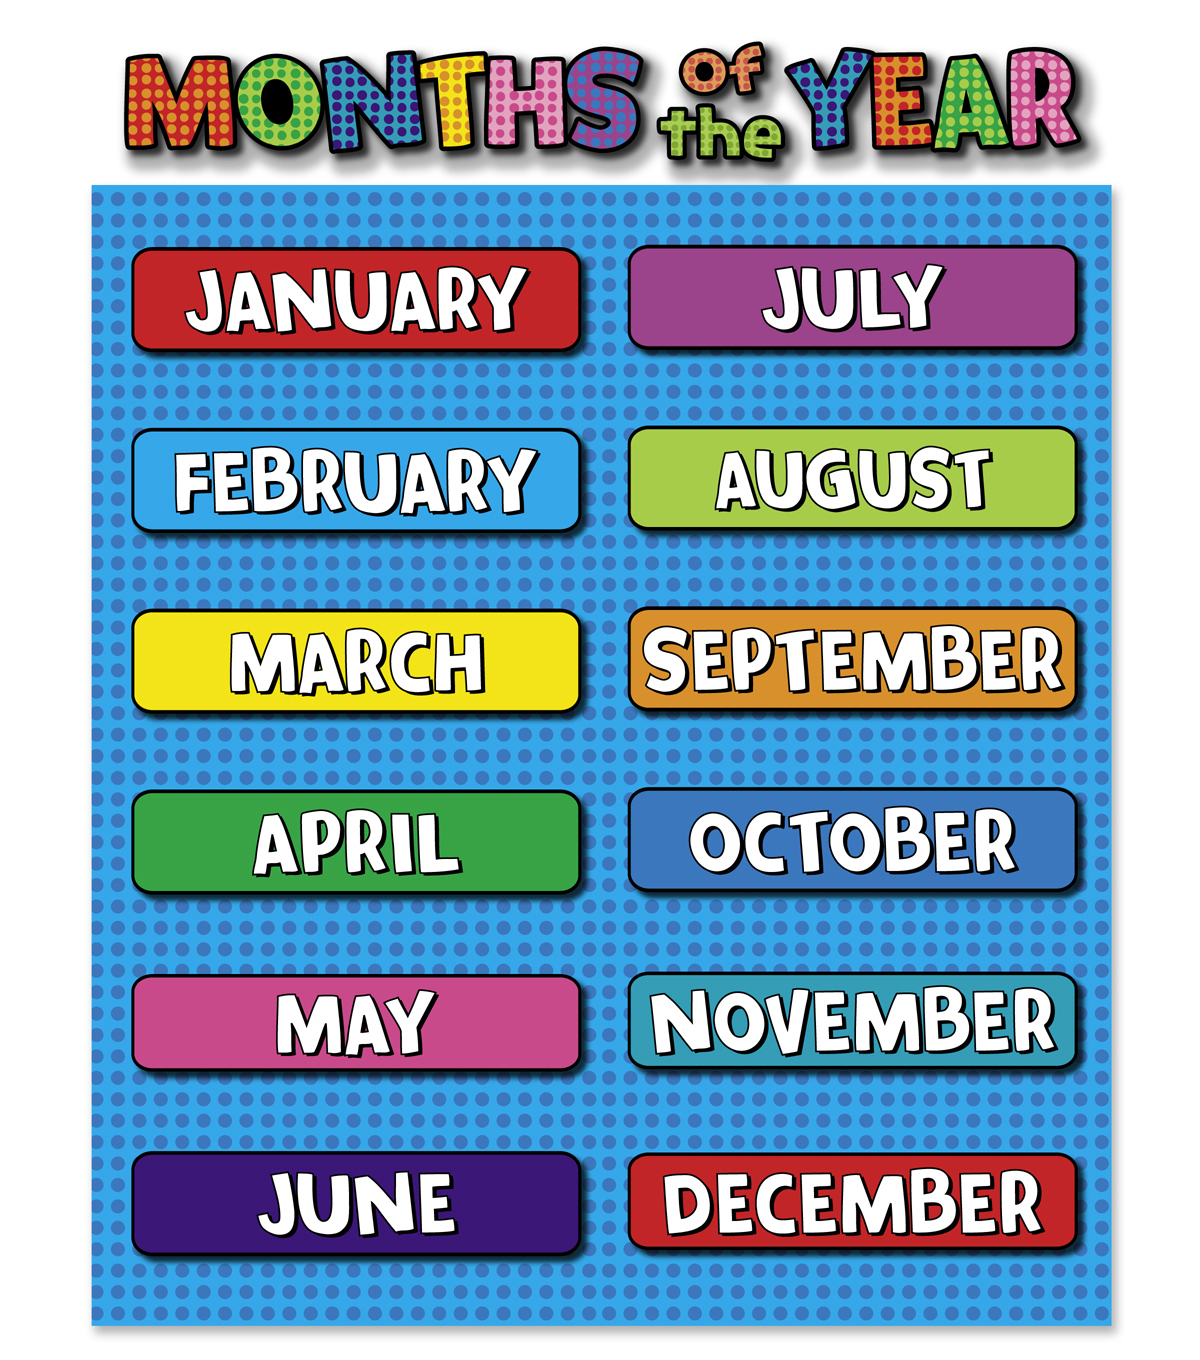 5 more months. Months of the year. Month для детей. Месяца на английском. Месяцы для детей по английскому.